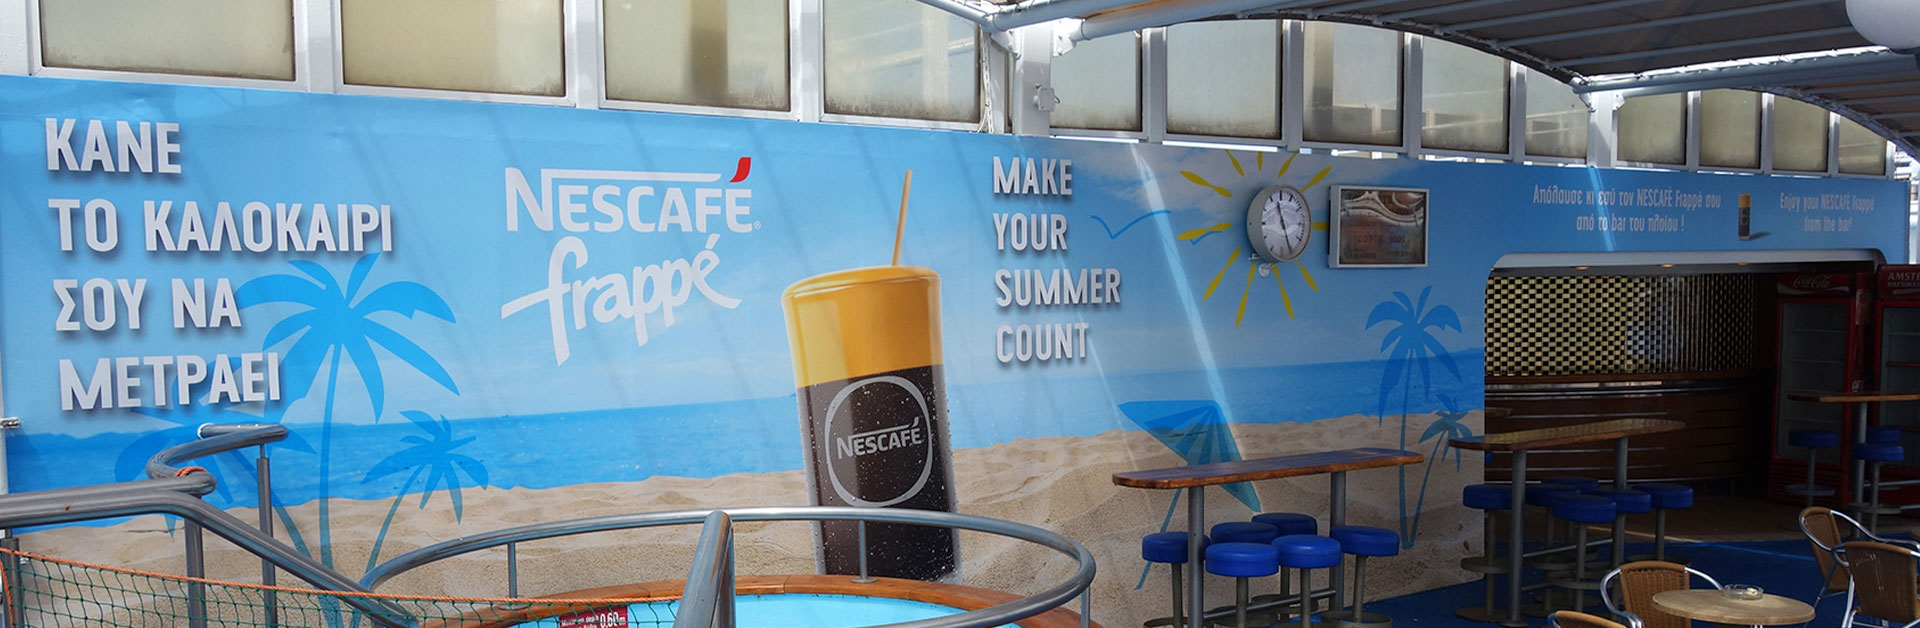 Nescafe frappe ship advertisment